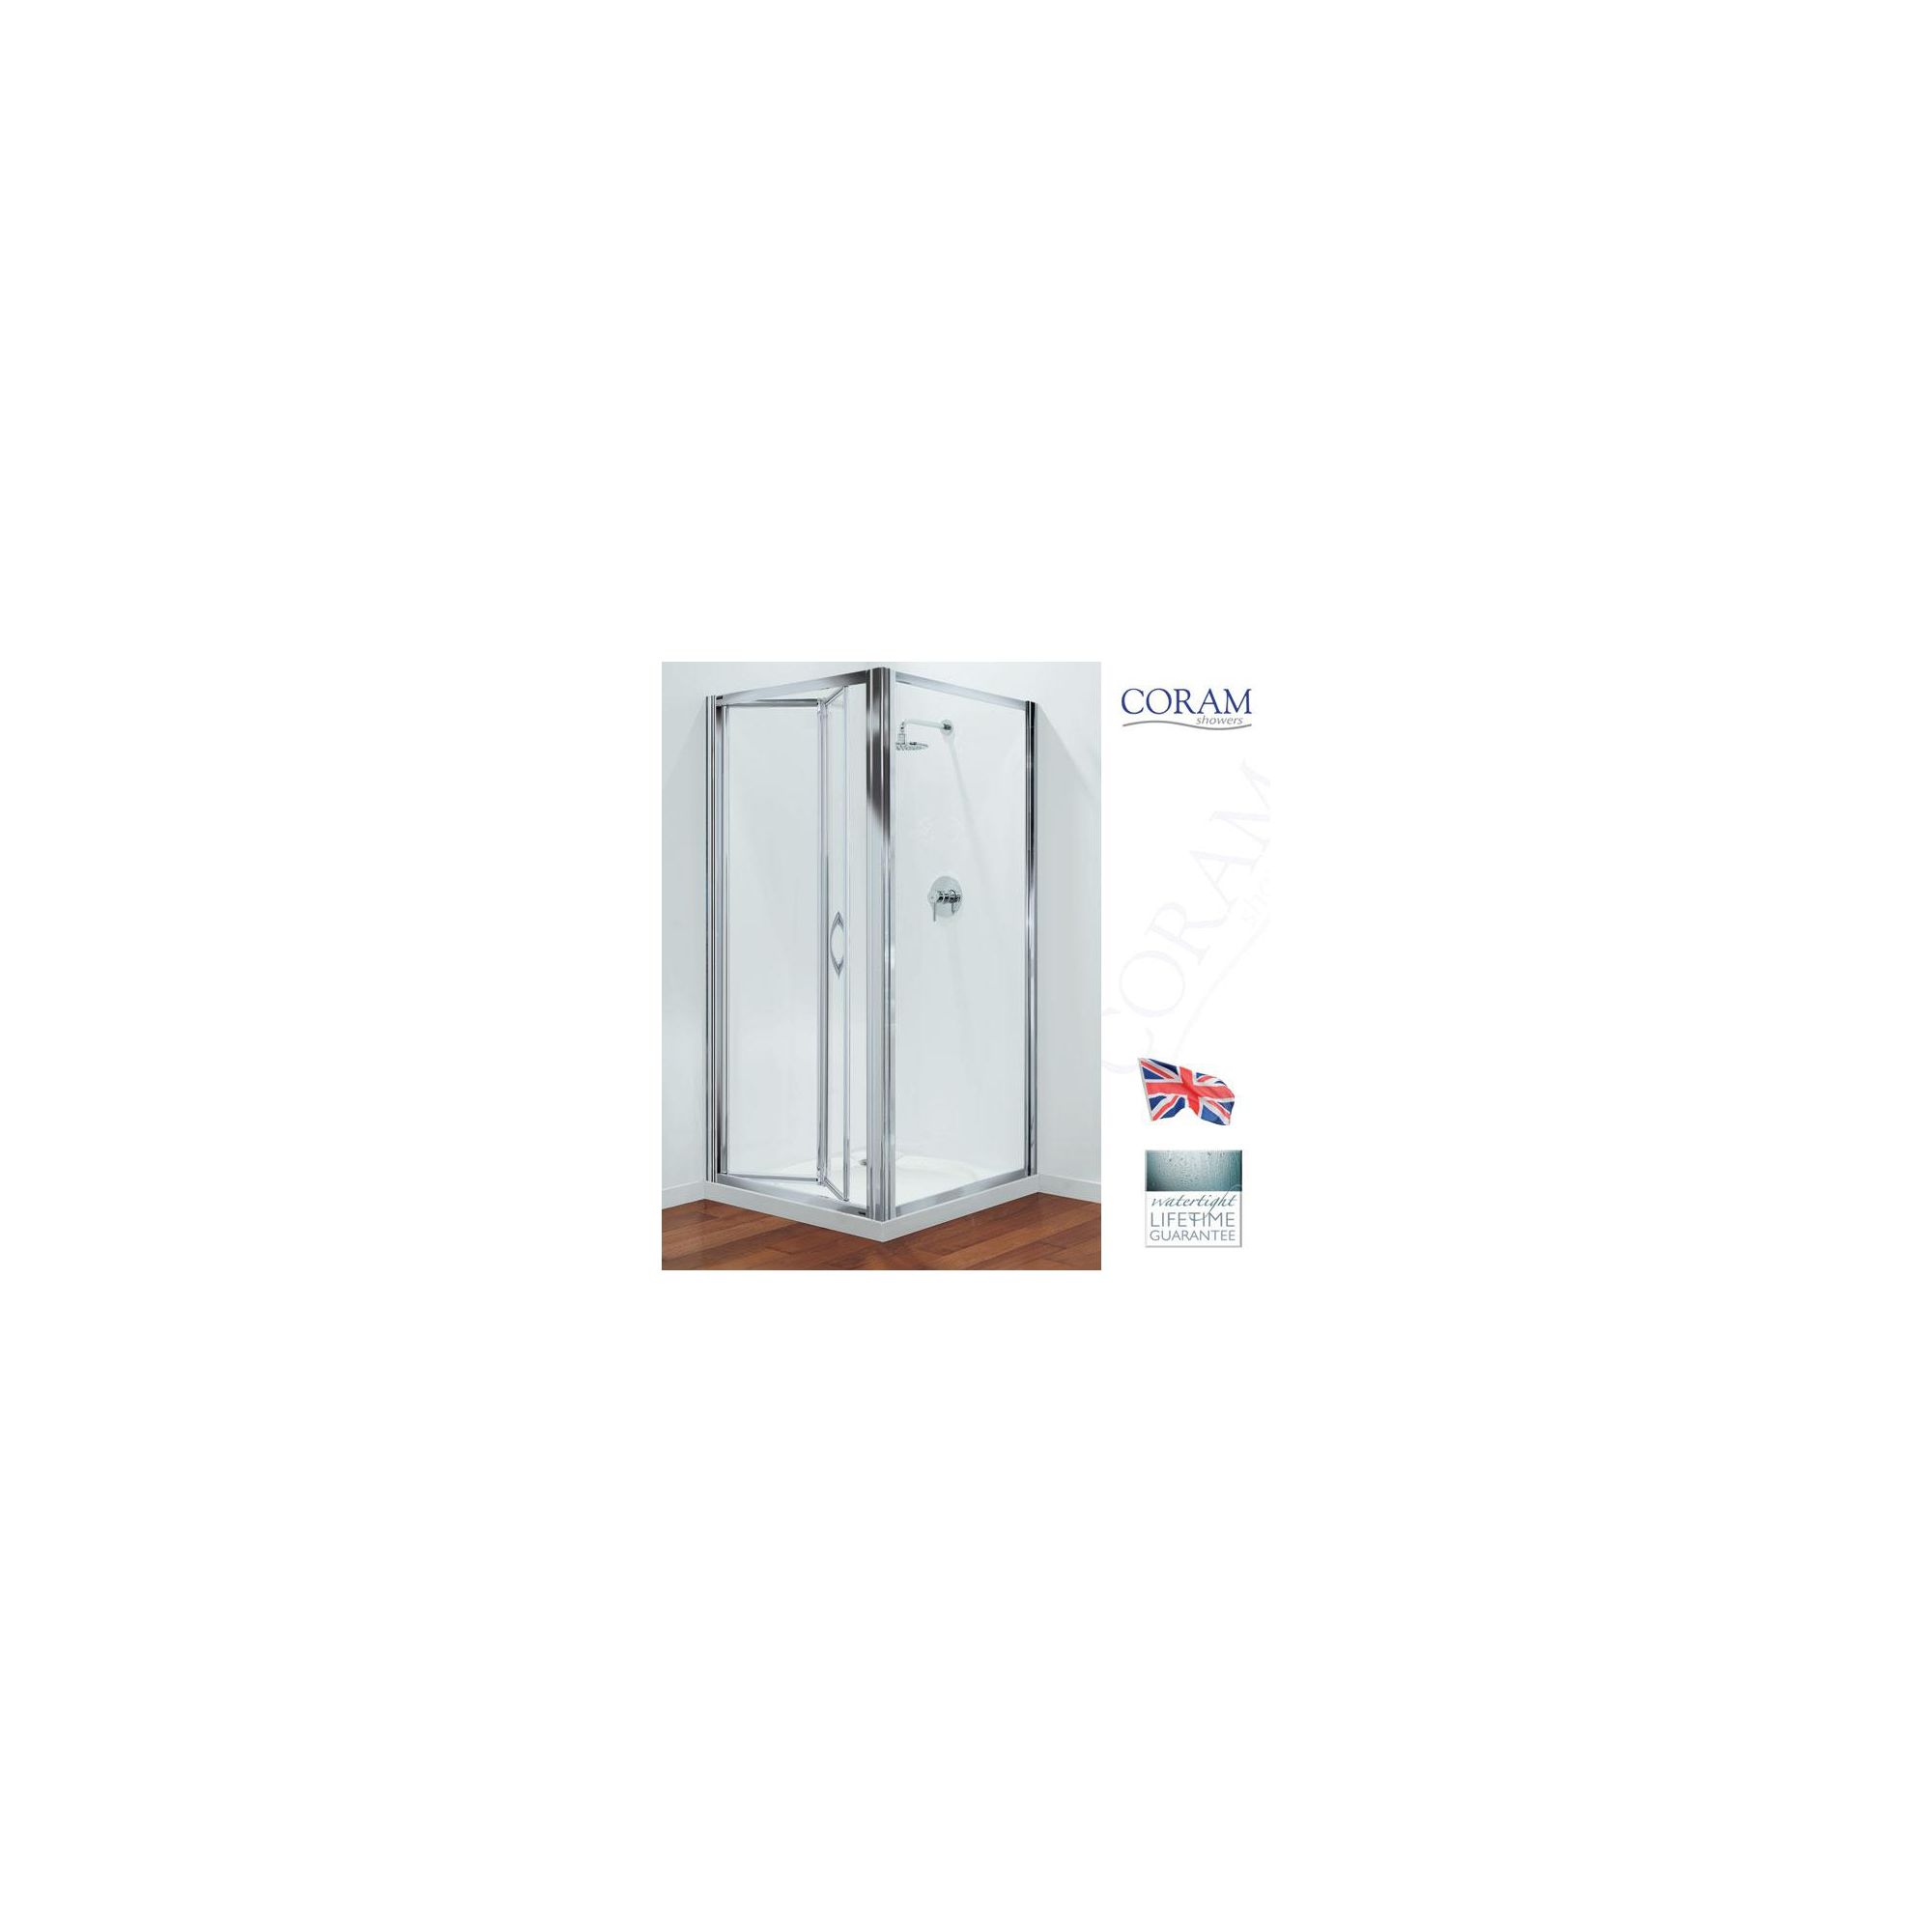 Coram Premier Bi-Fold Door Shower Enclosure, 800mm x 800mm, Low Profile Tray, 6mm Glass at Tesco Direct